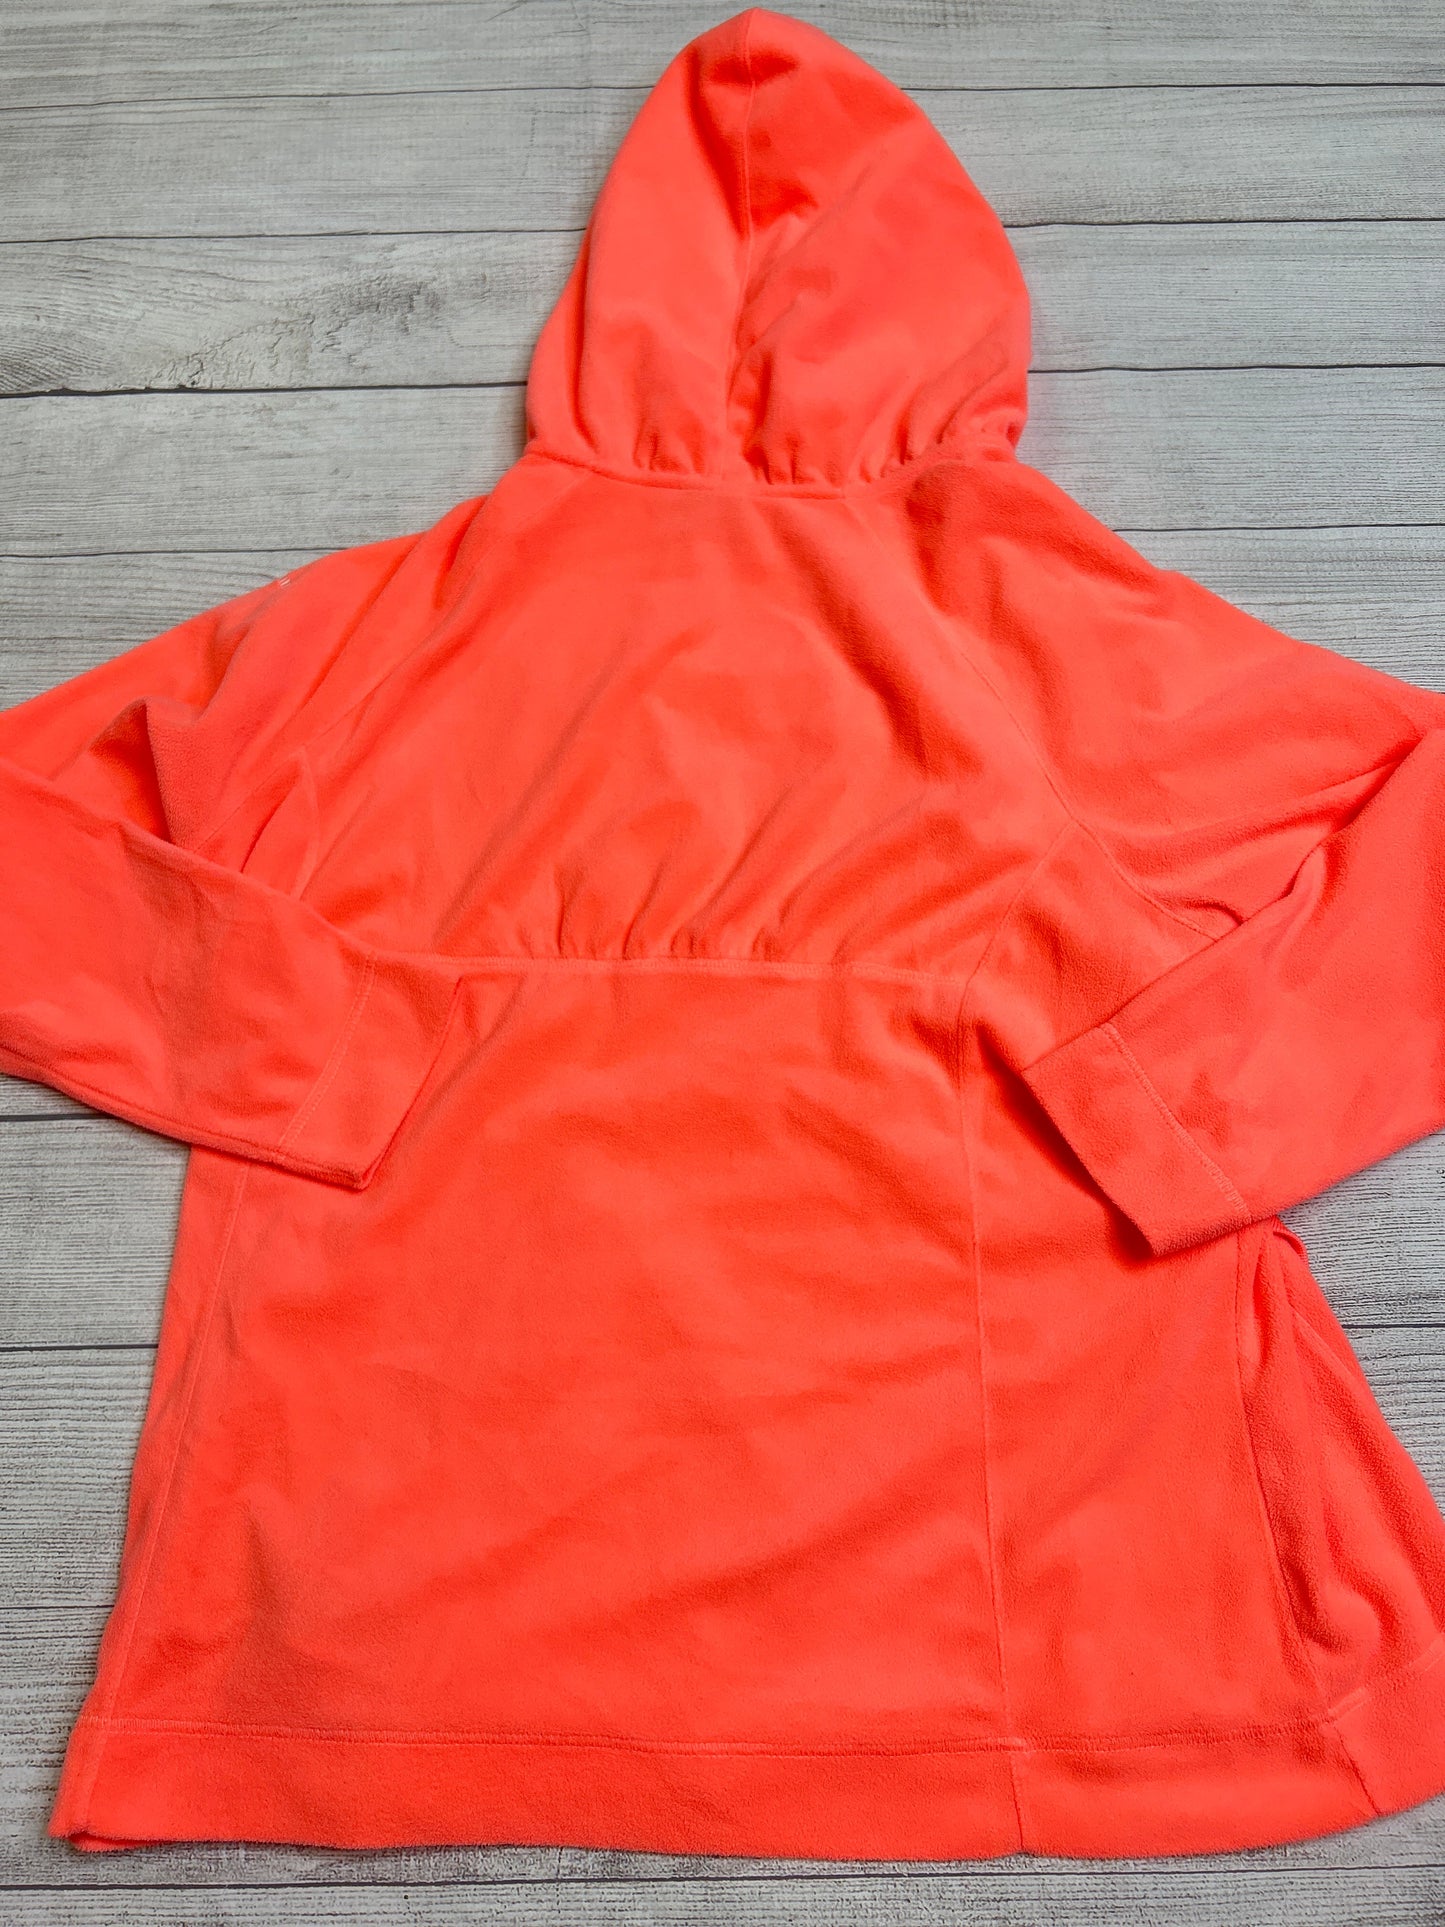 Athletic Sweatshirt Hoodie By Columbia  Size: 2x